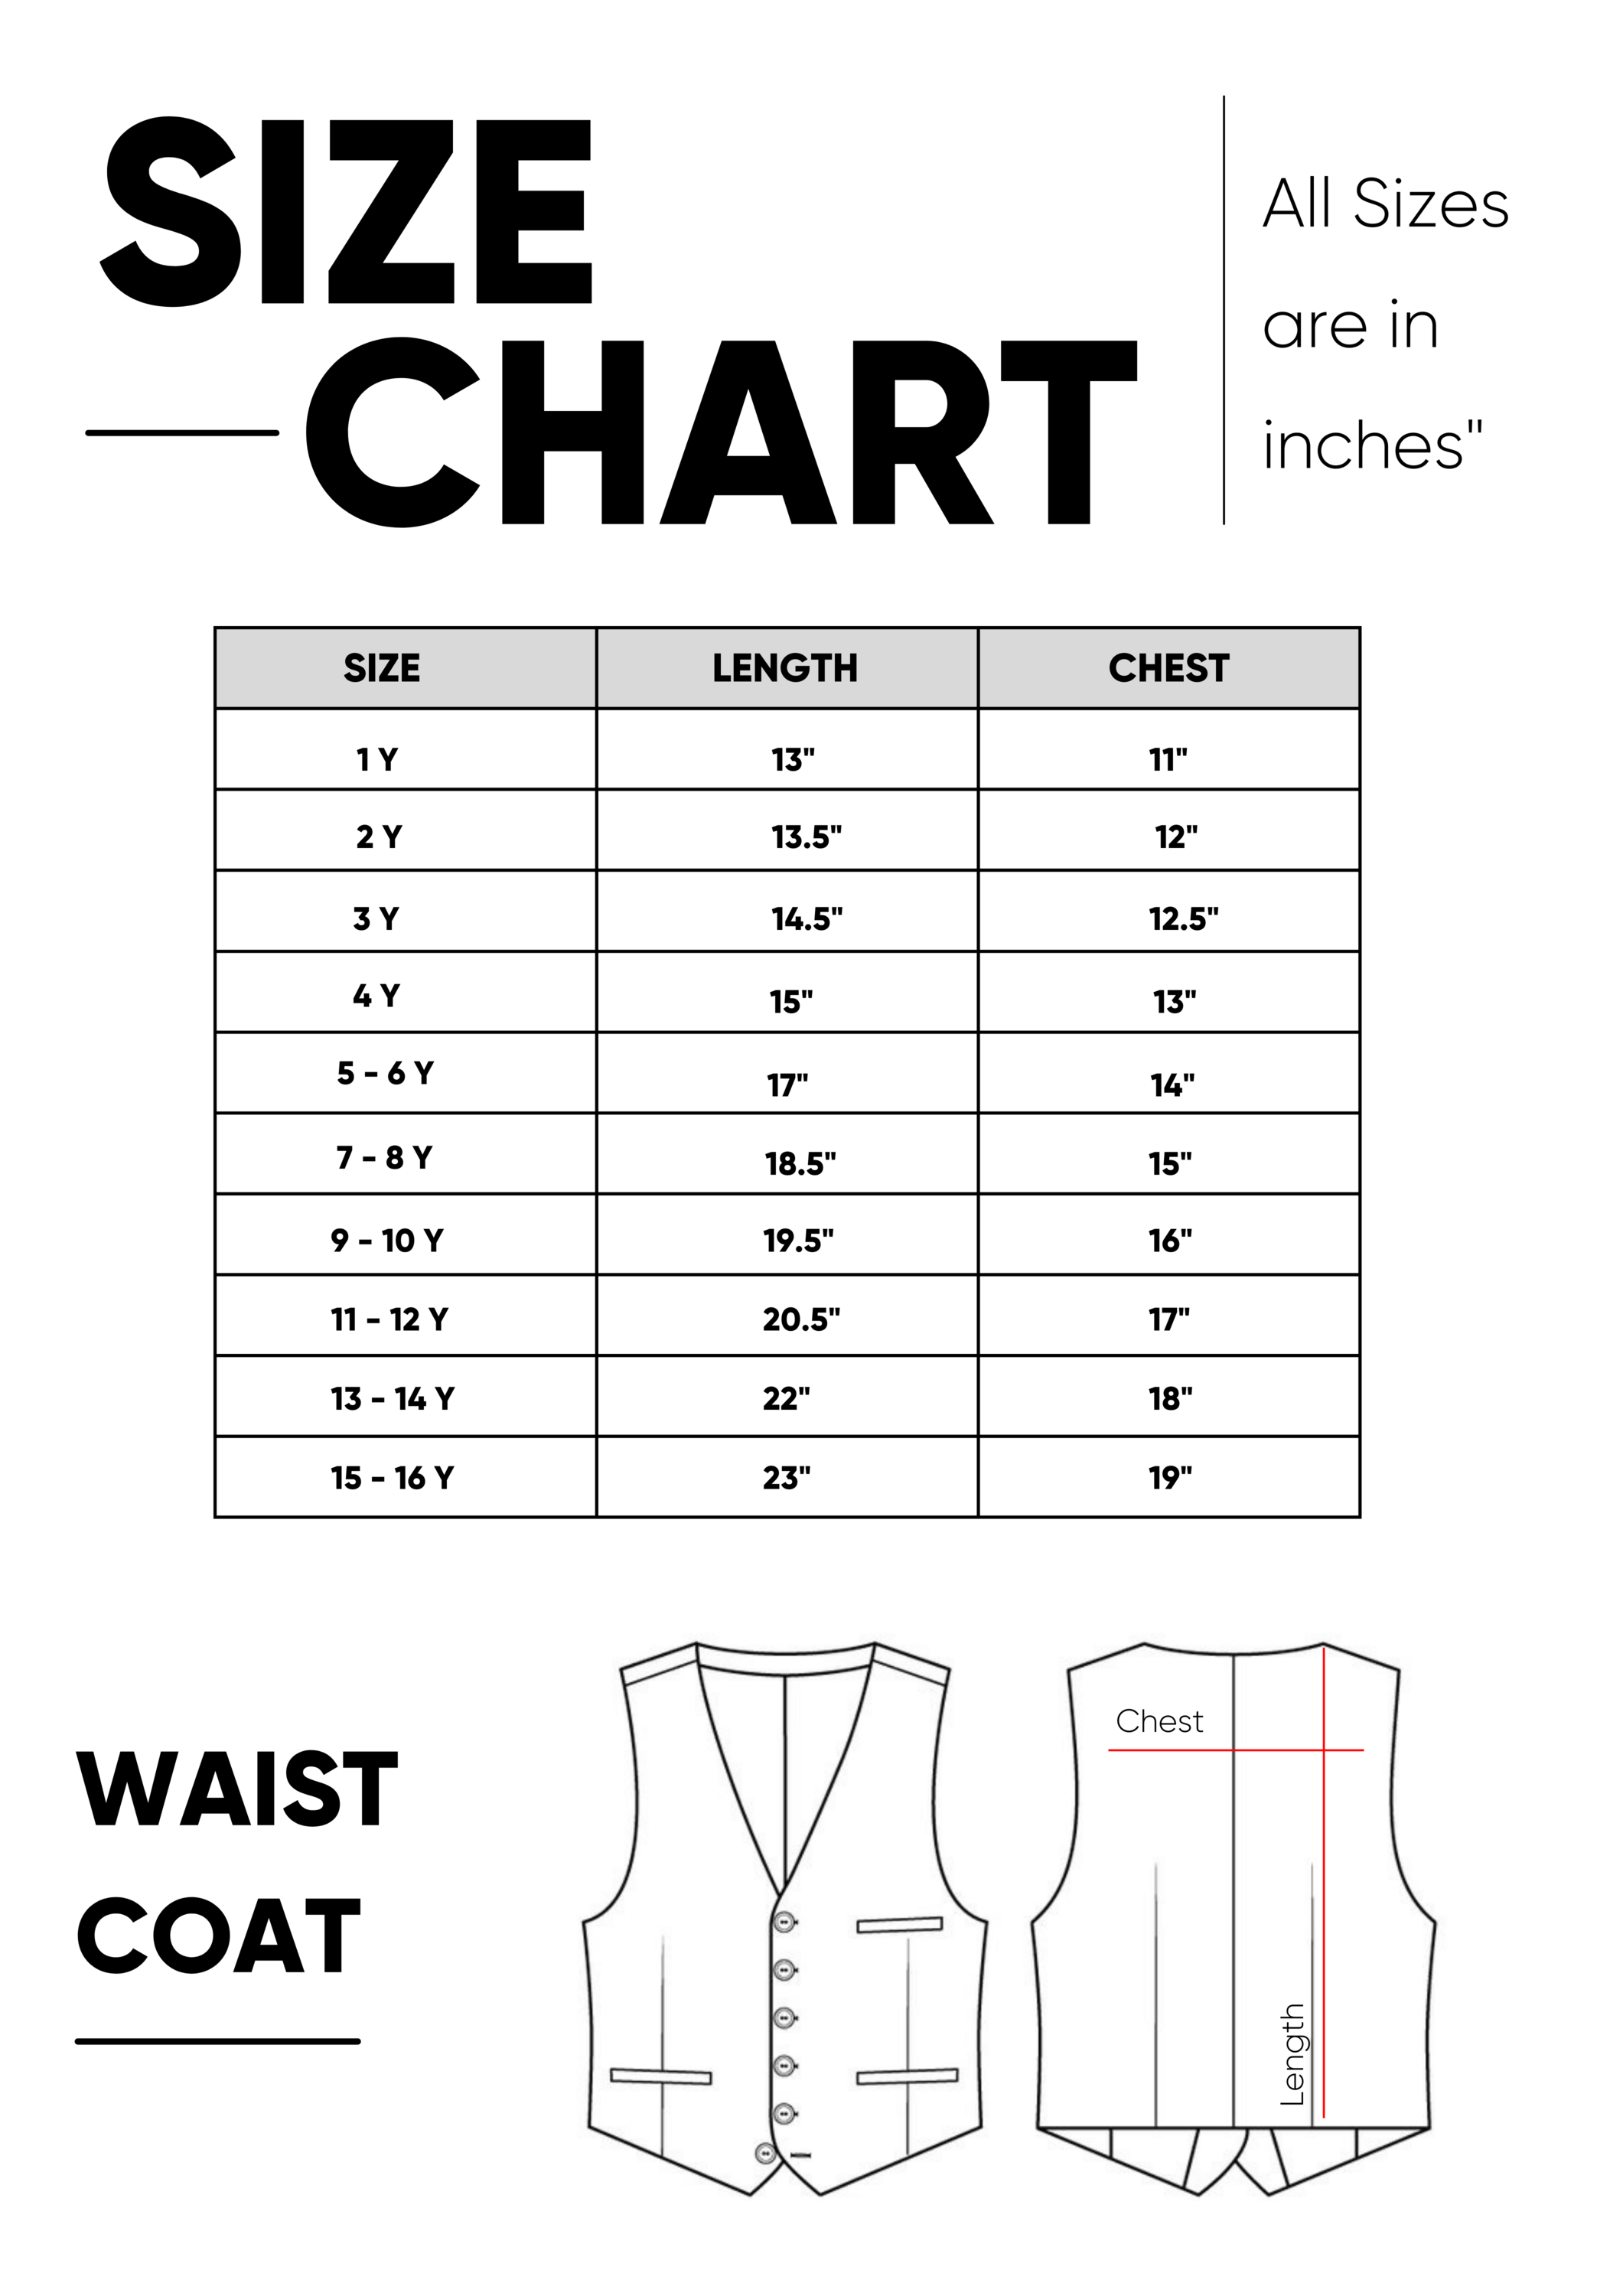 Waist Coat Size Chart